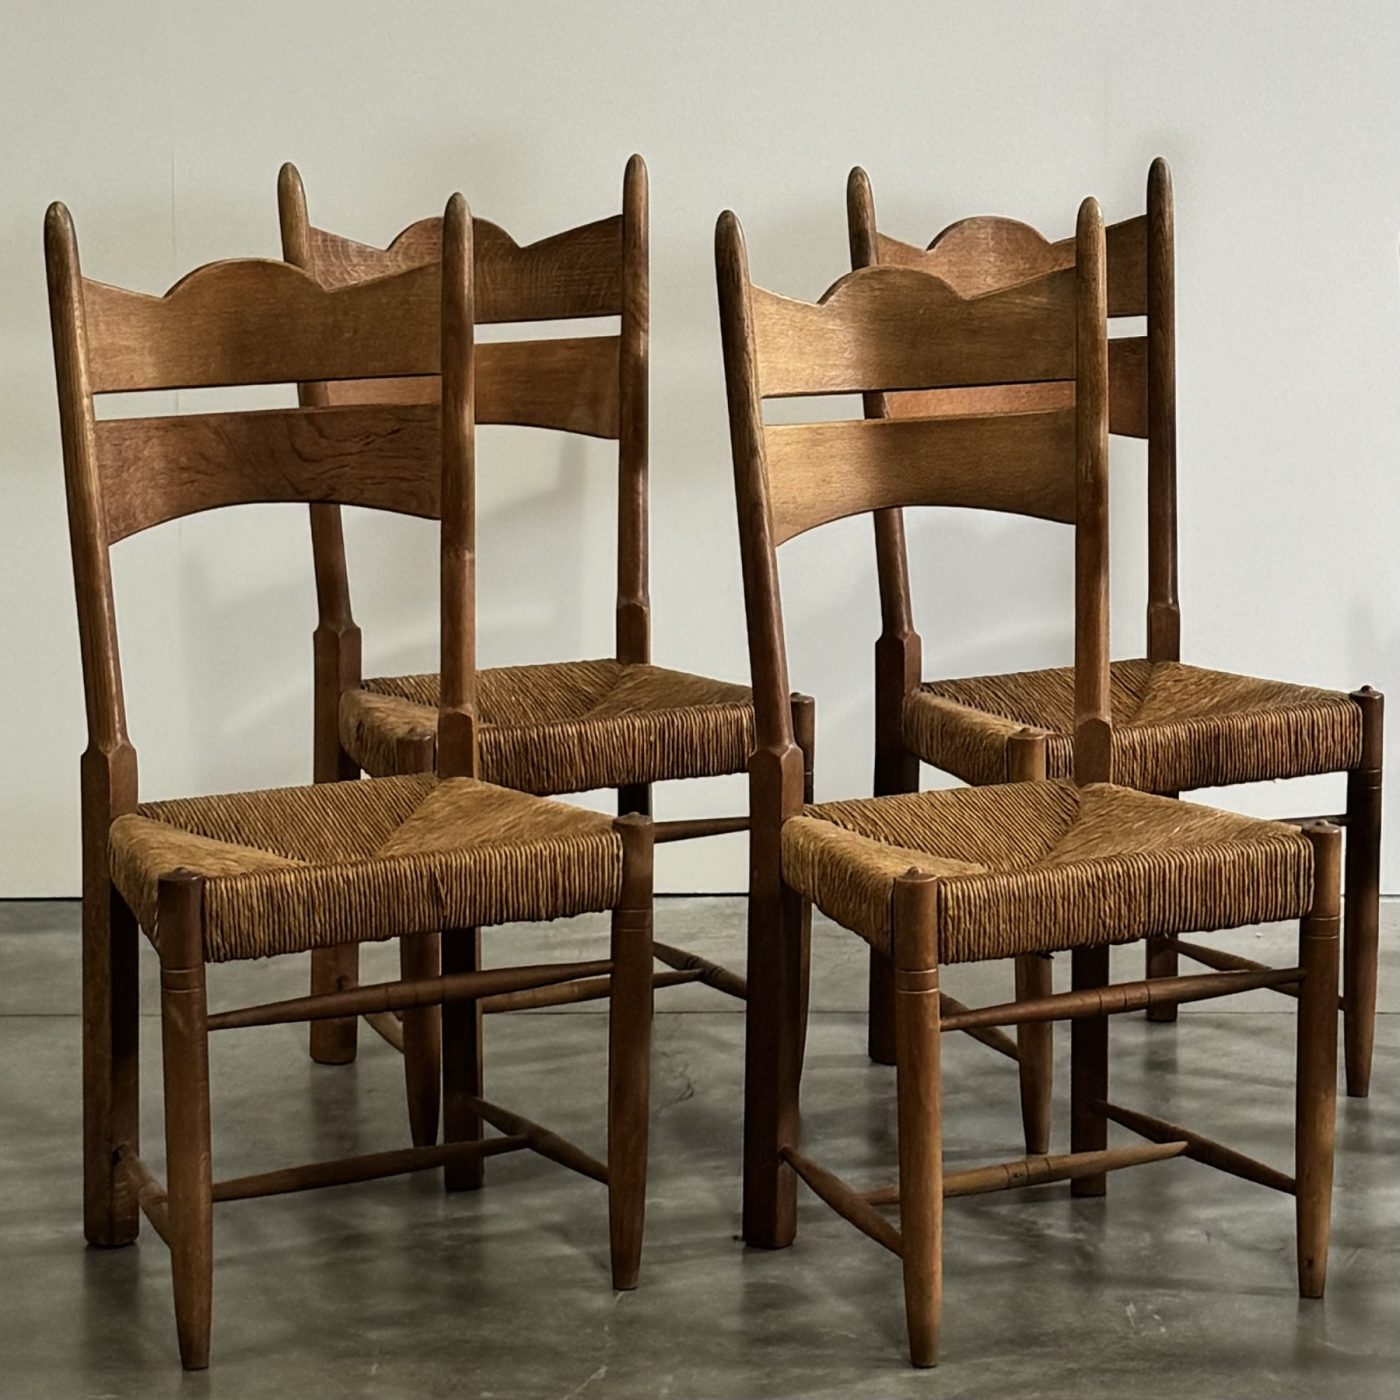 objet-vagabond-rustic-chairs0009